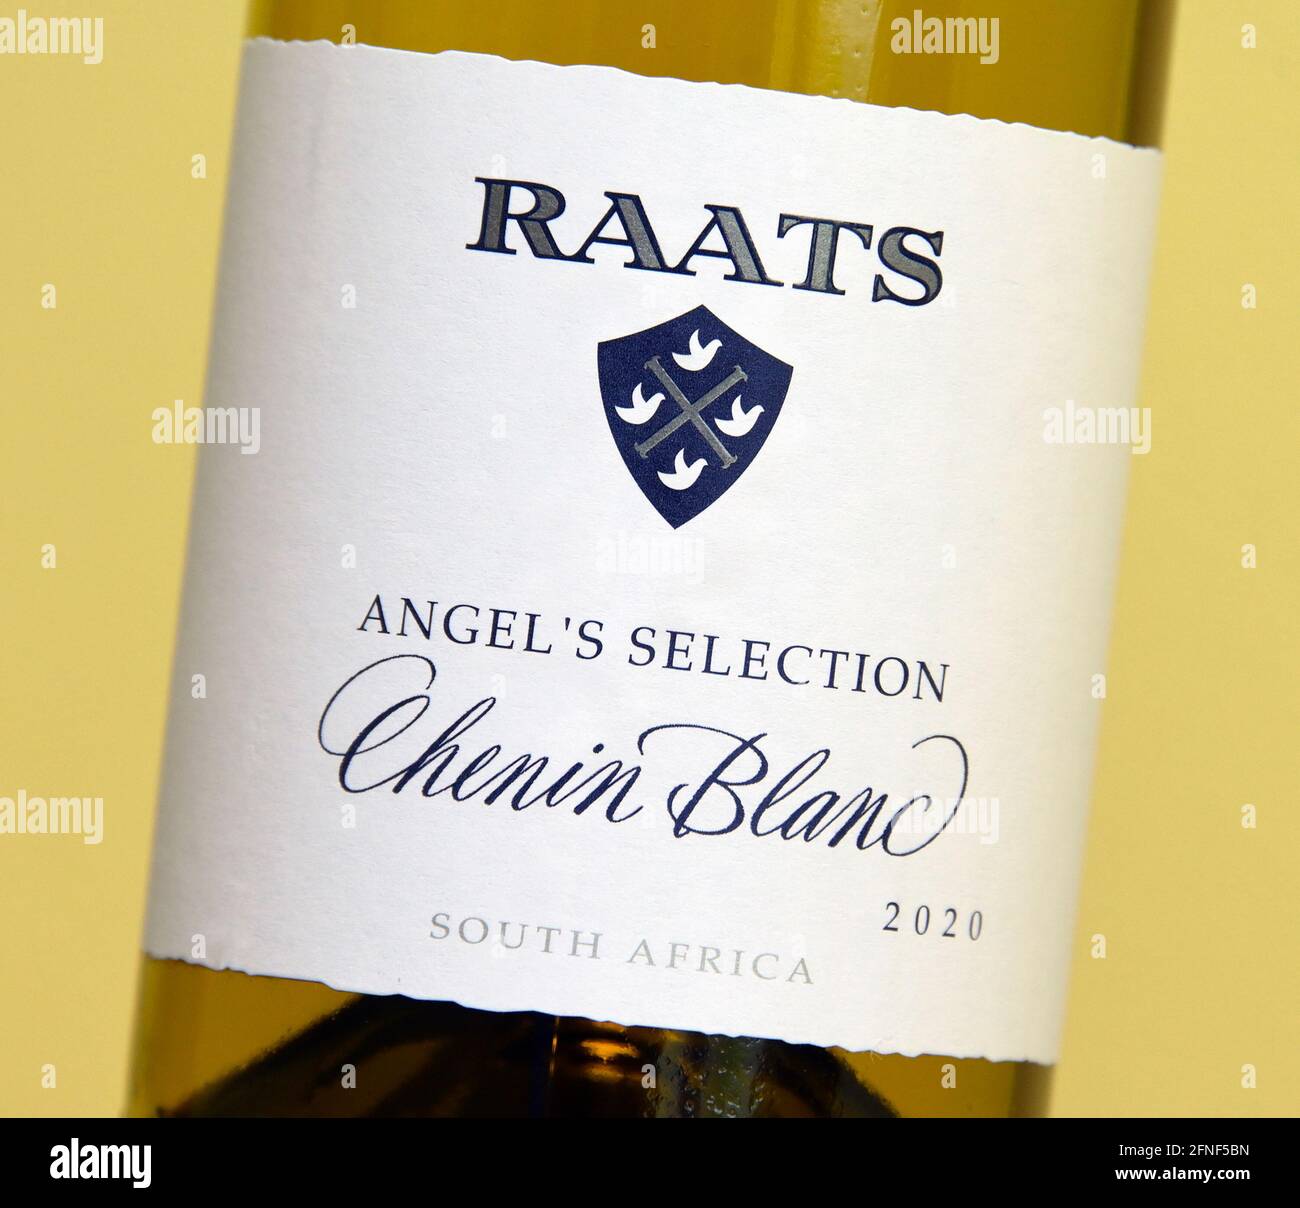 Wine label. Raats Angel's Selection Chenin Blanc. 2020. South Africa. Stock Photo